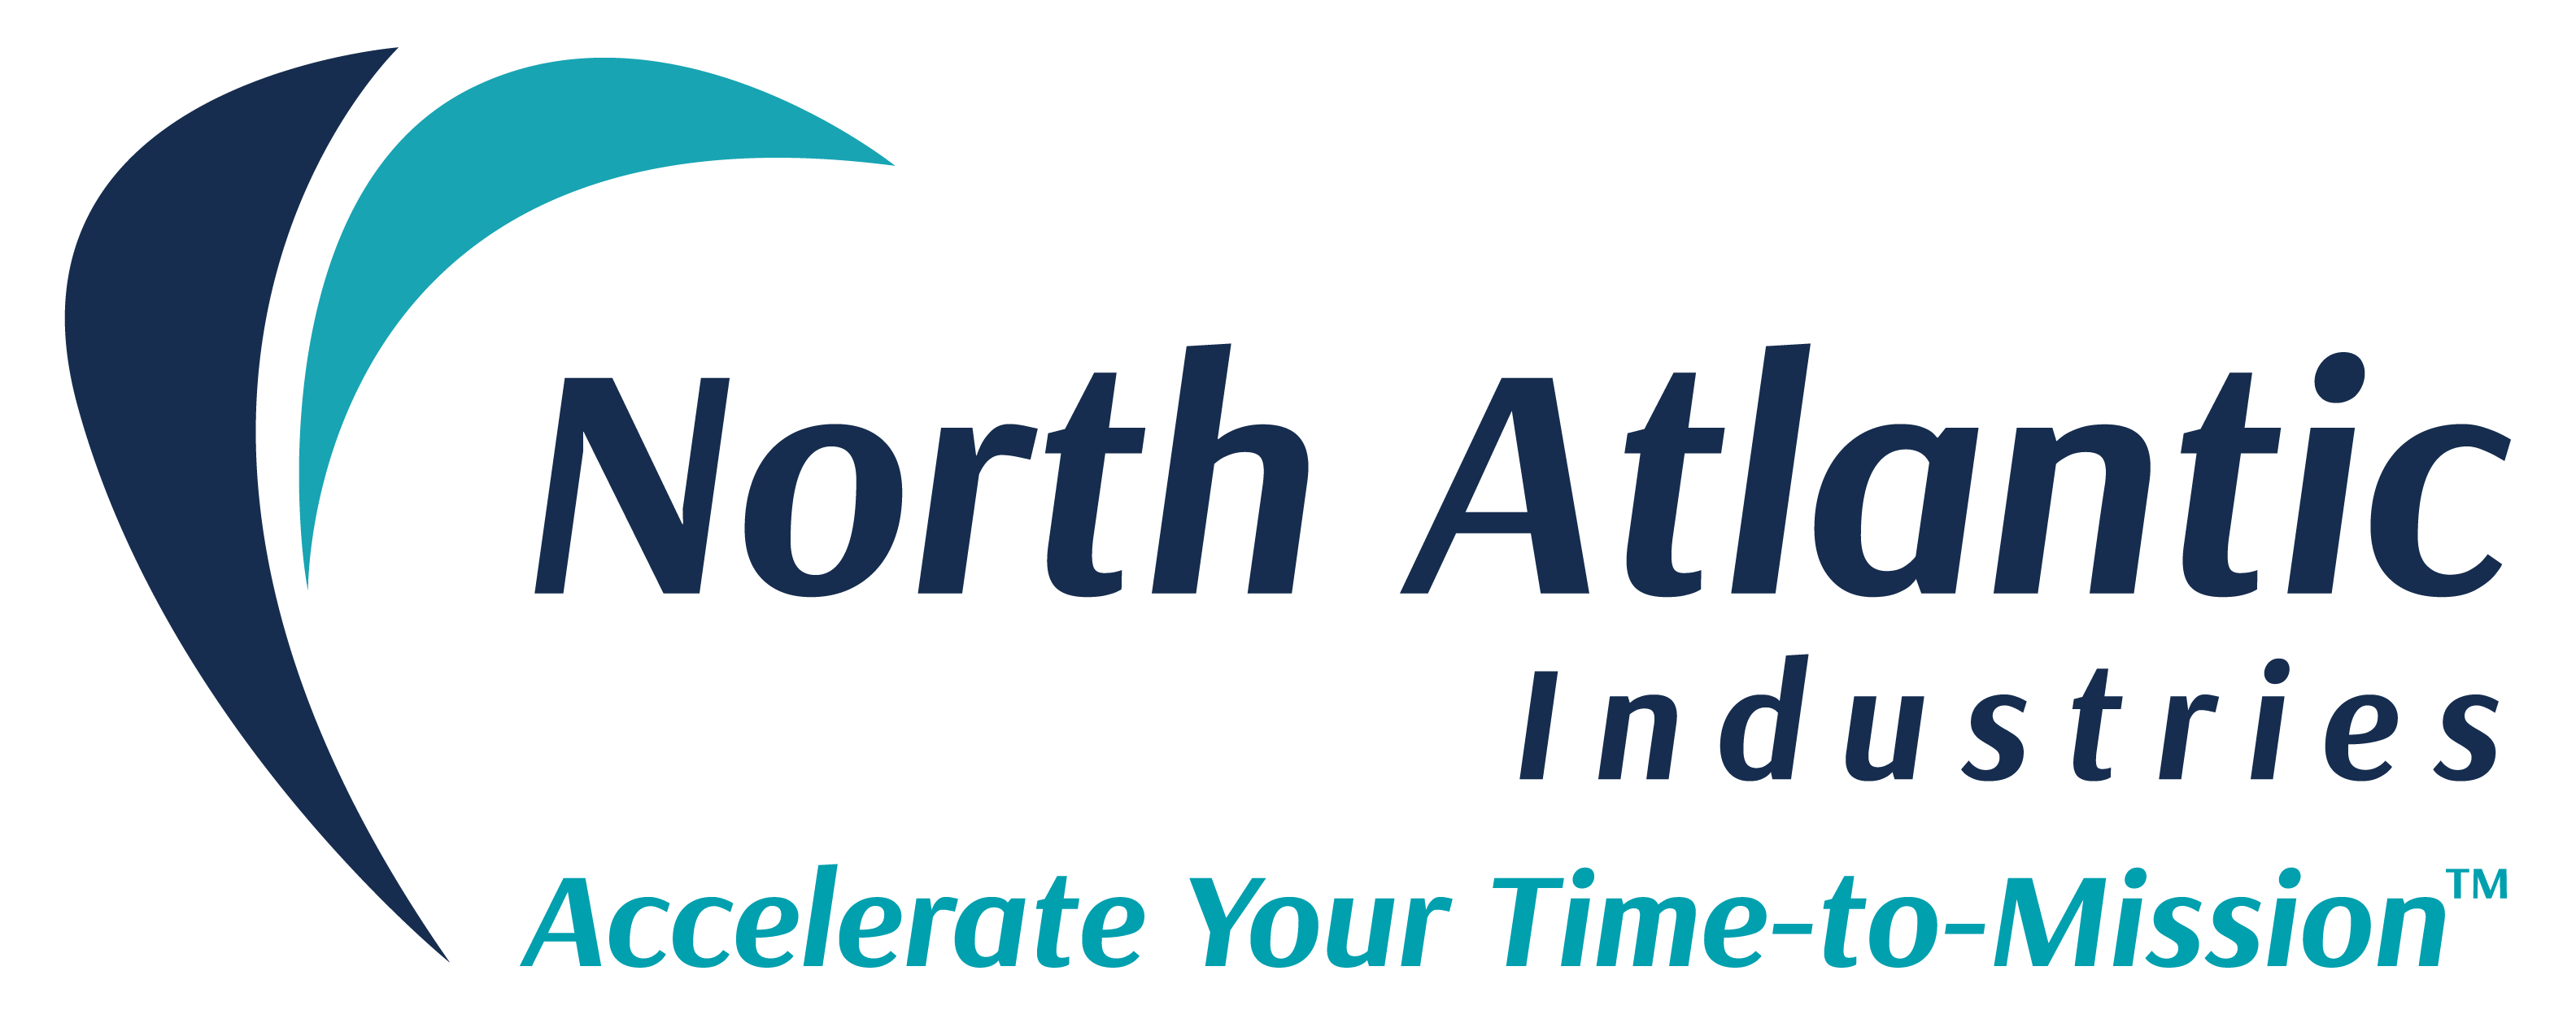 North Atlantic Industries Company Logo